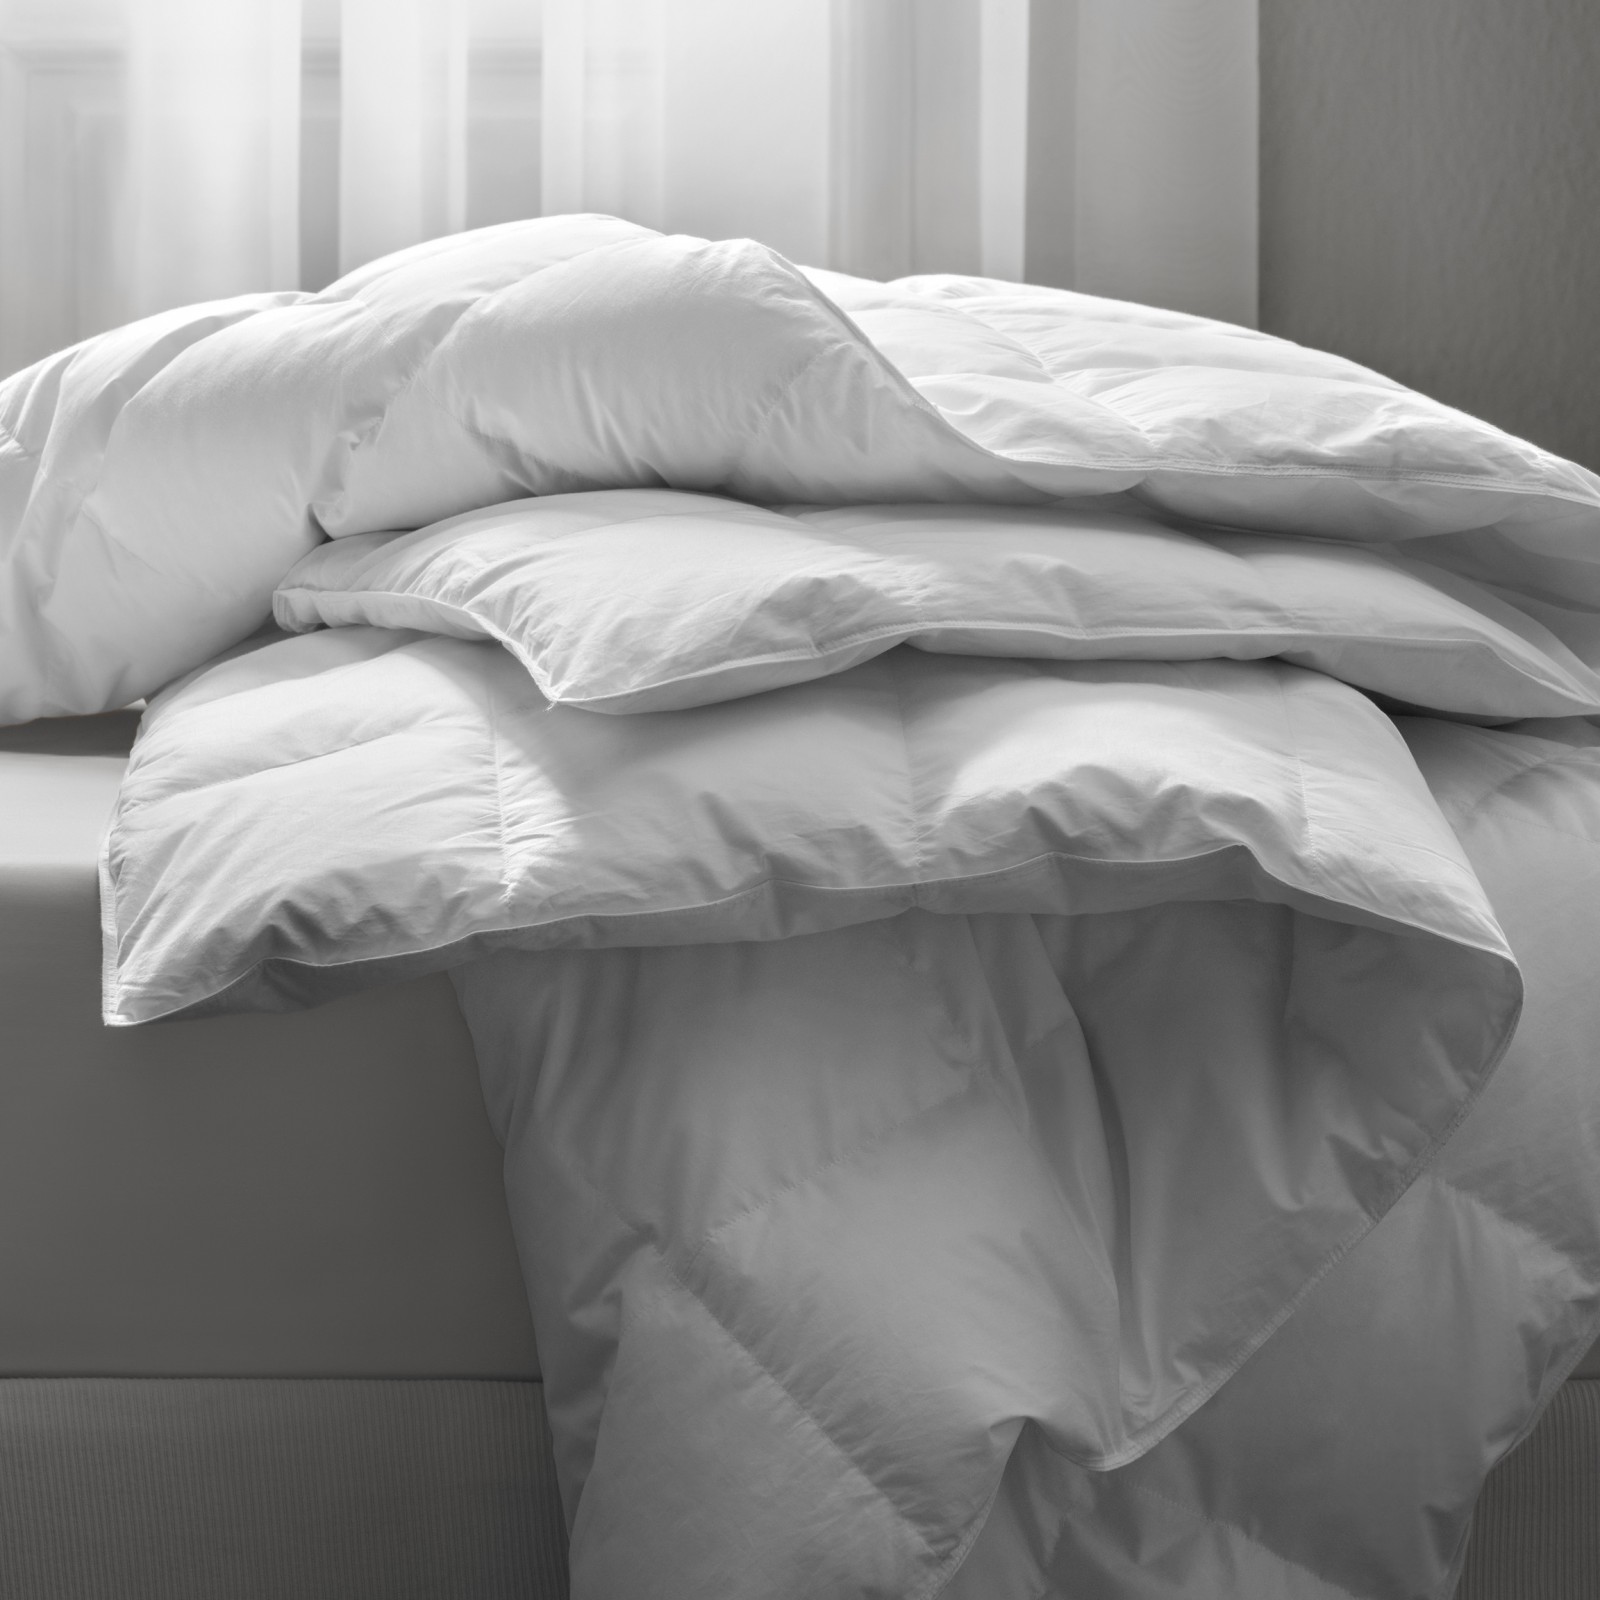 Одеяла Togas Одеяло легкое Роял цвет: белый (220х240 см)